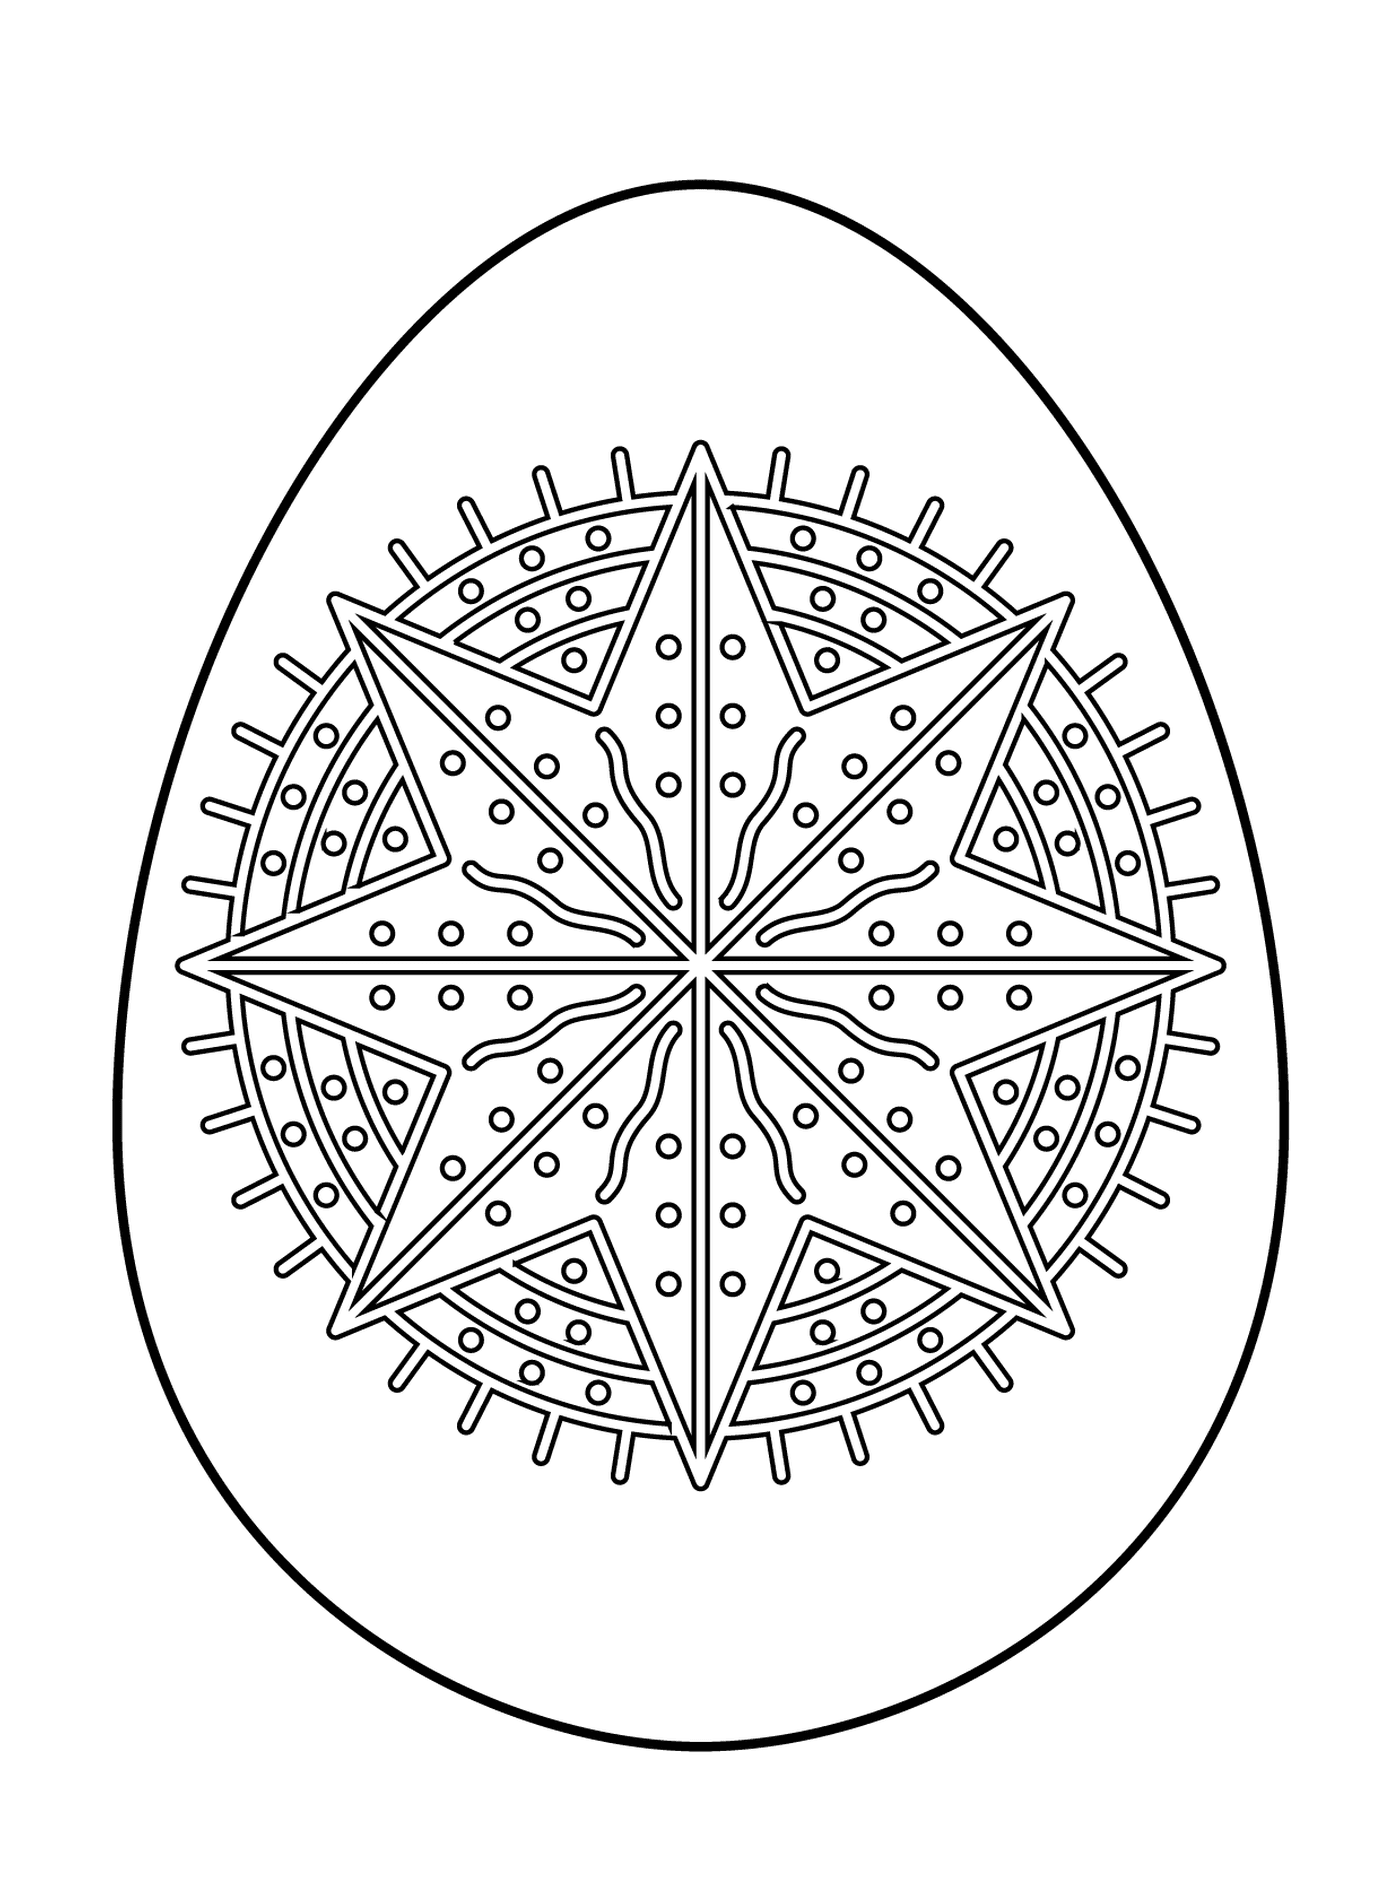  Easter egg with octagram star pattern 